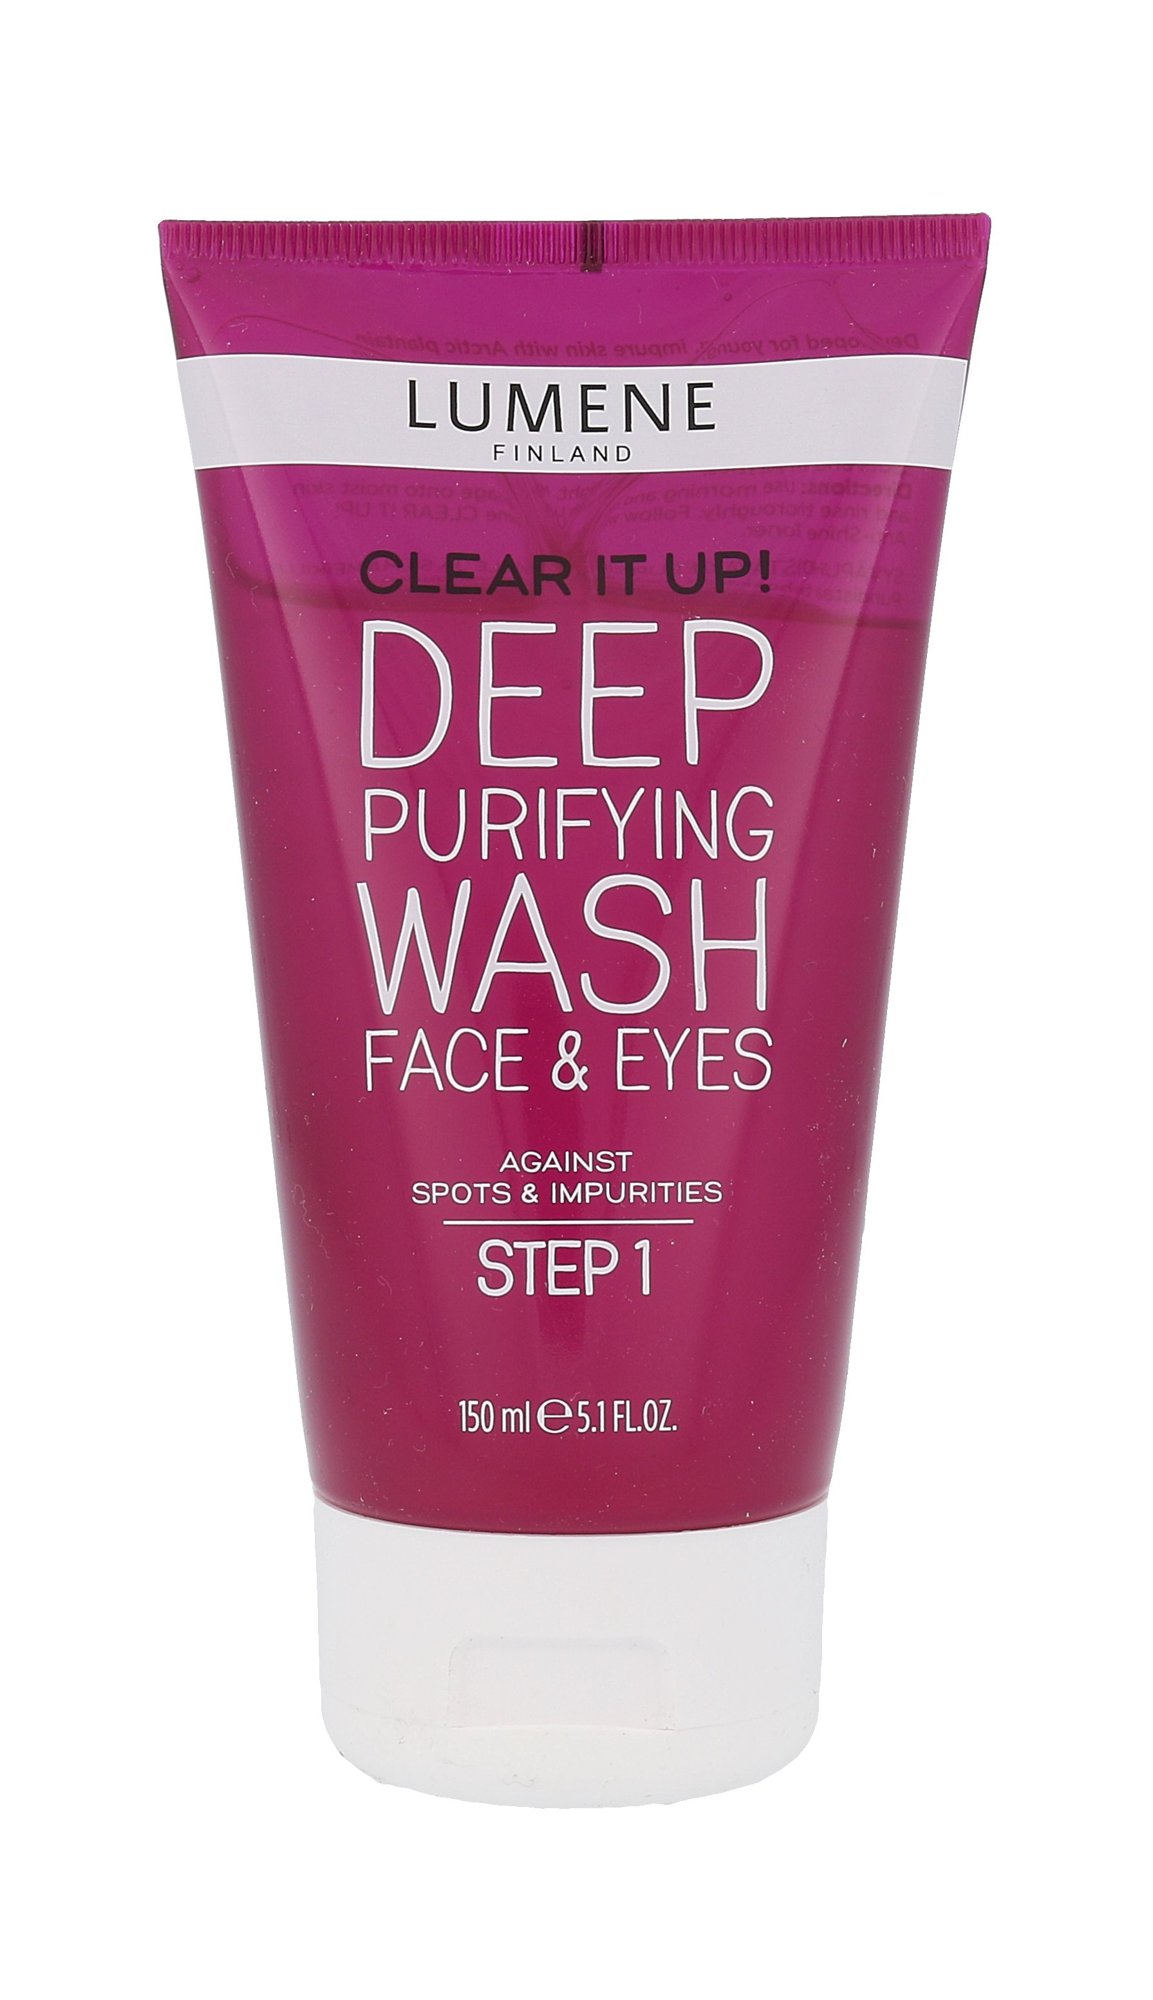 Lumene Clear It Up! Deep Purifying Wash Face & Eyes